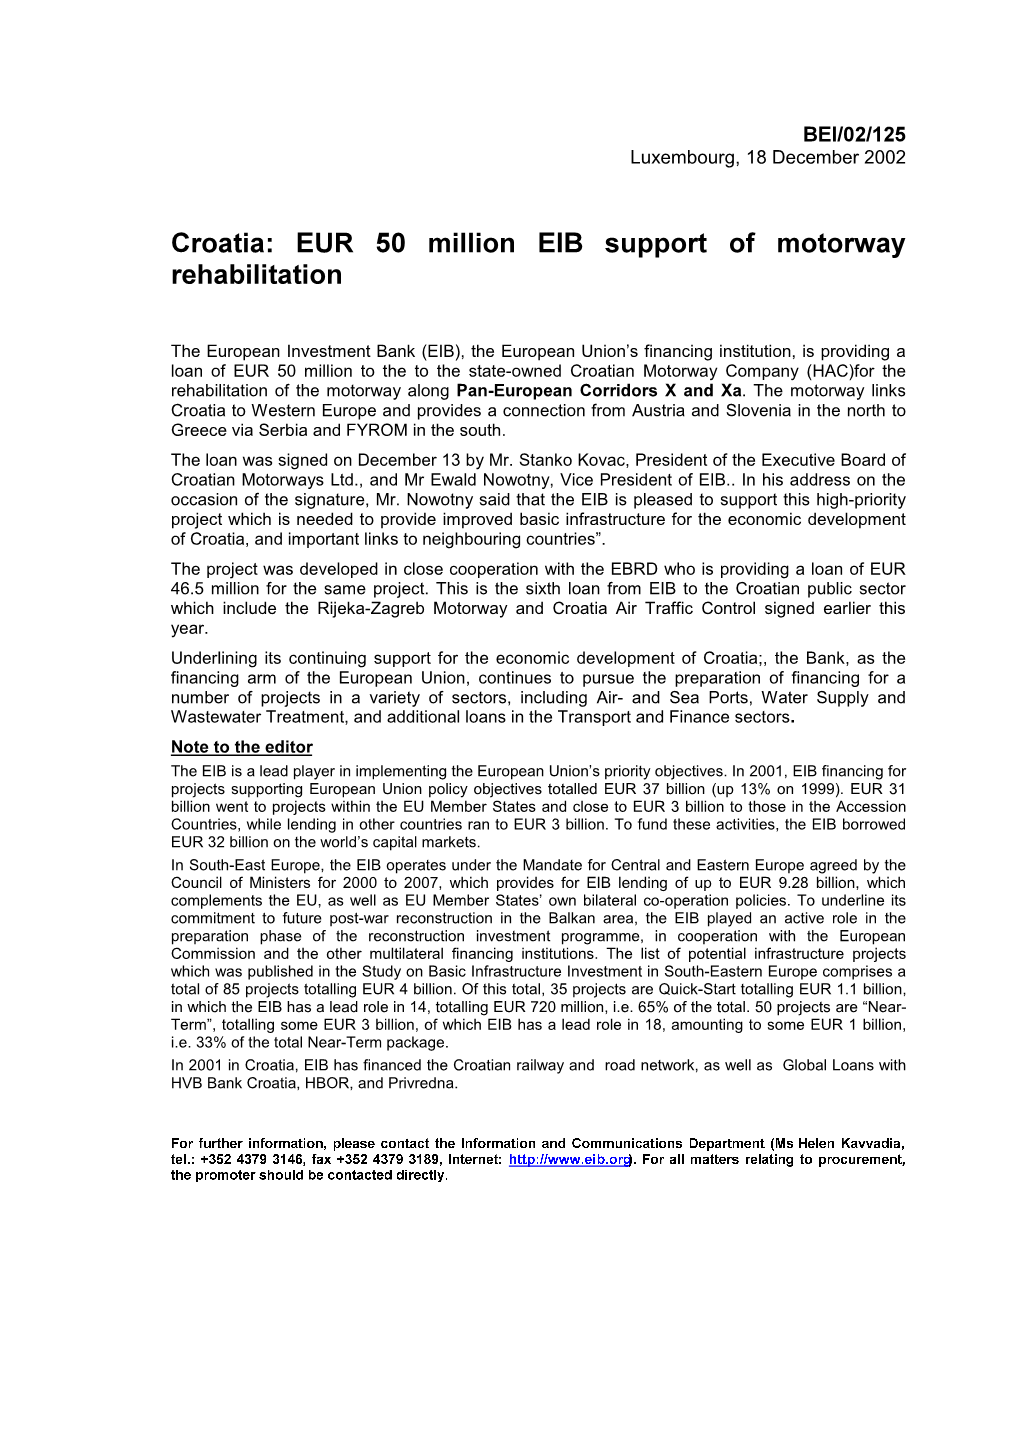 Croatia: EUR 50 Million Elb Support of Motorway Rehabilitation